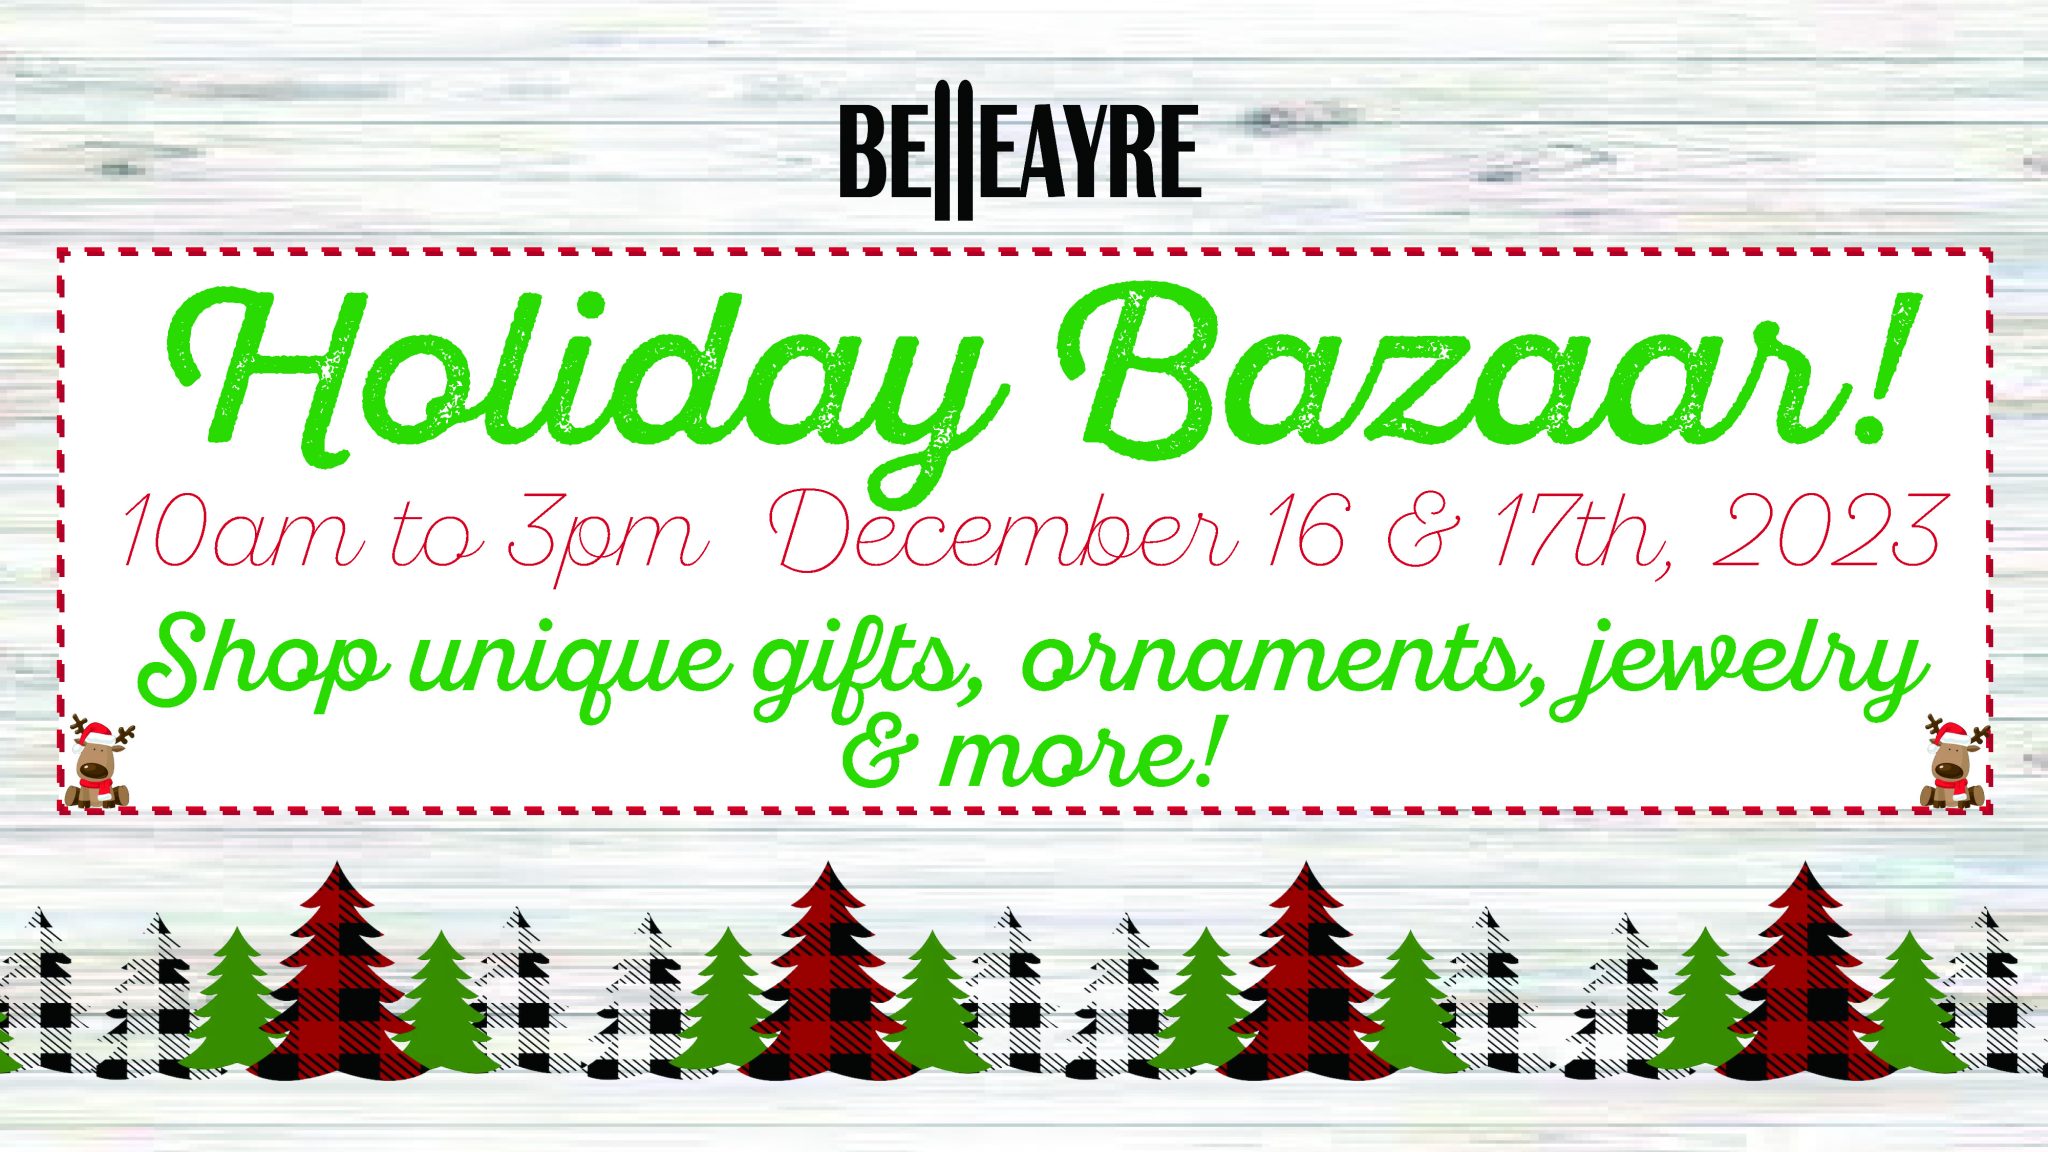 holiday bazaar events flyer